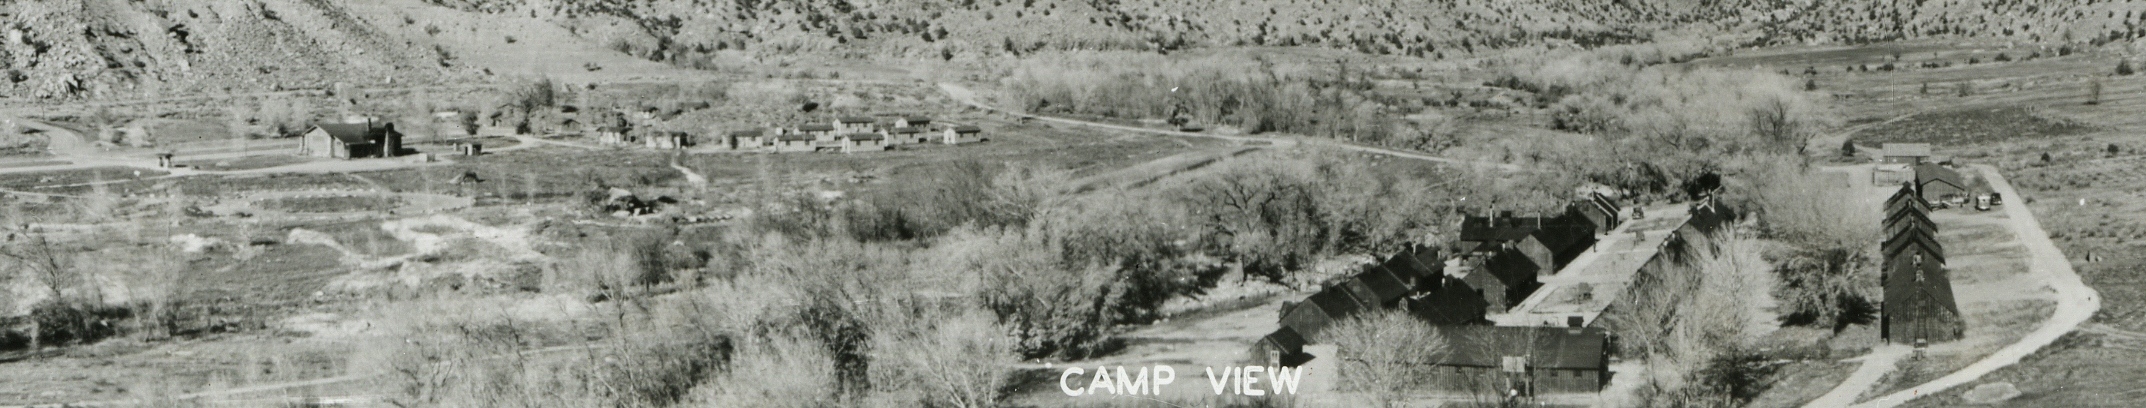 WCHS-01041 The Bridge Mountain CCC Camp in 1939